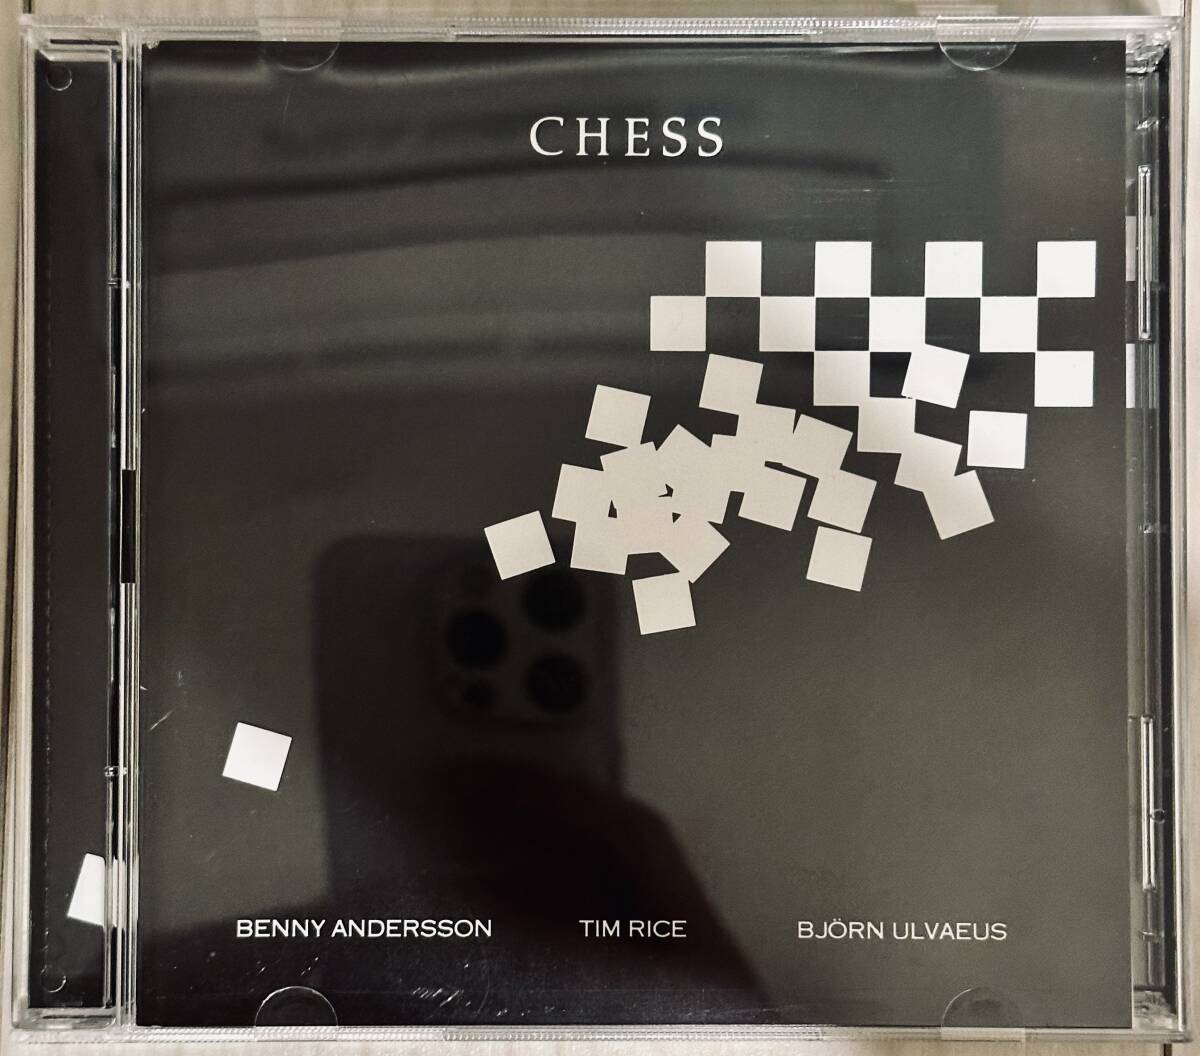 CHESS Musical/Benny Andersson Tim rice Bjorn Ulvaeus/チェス ミュージカル ABBA アバ